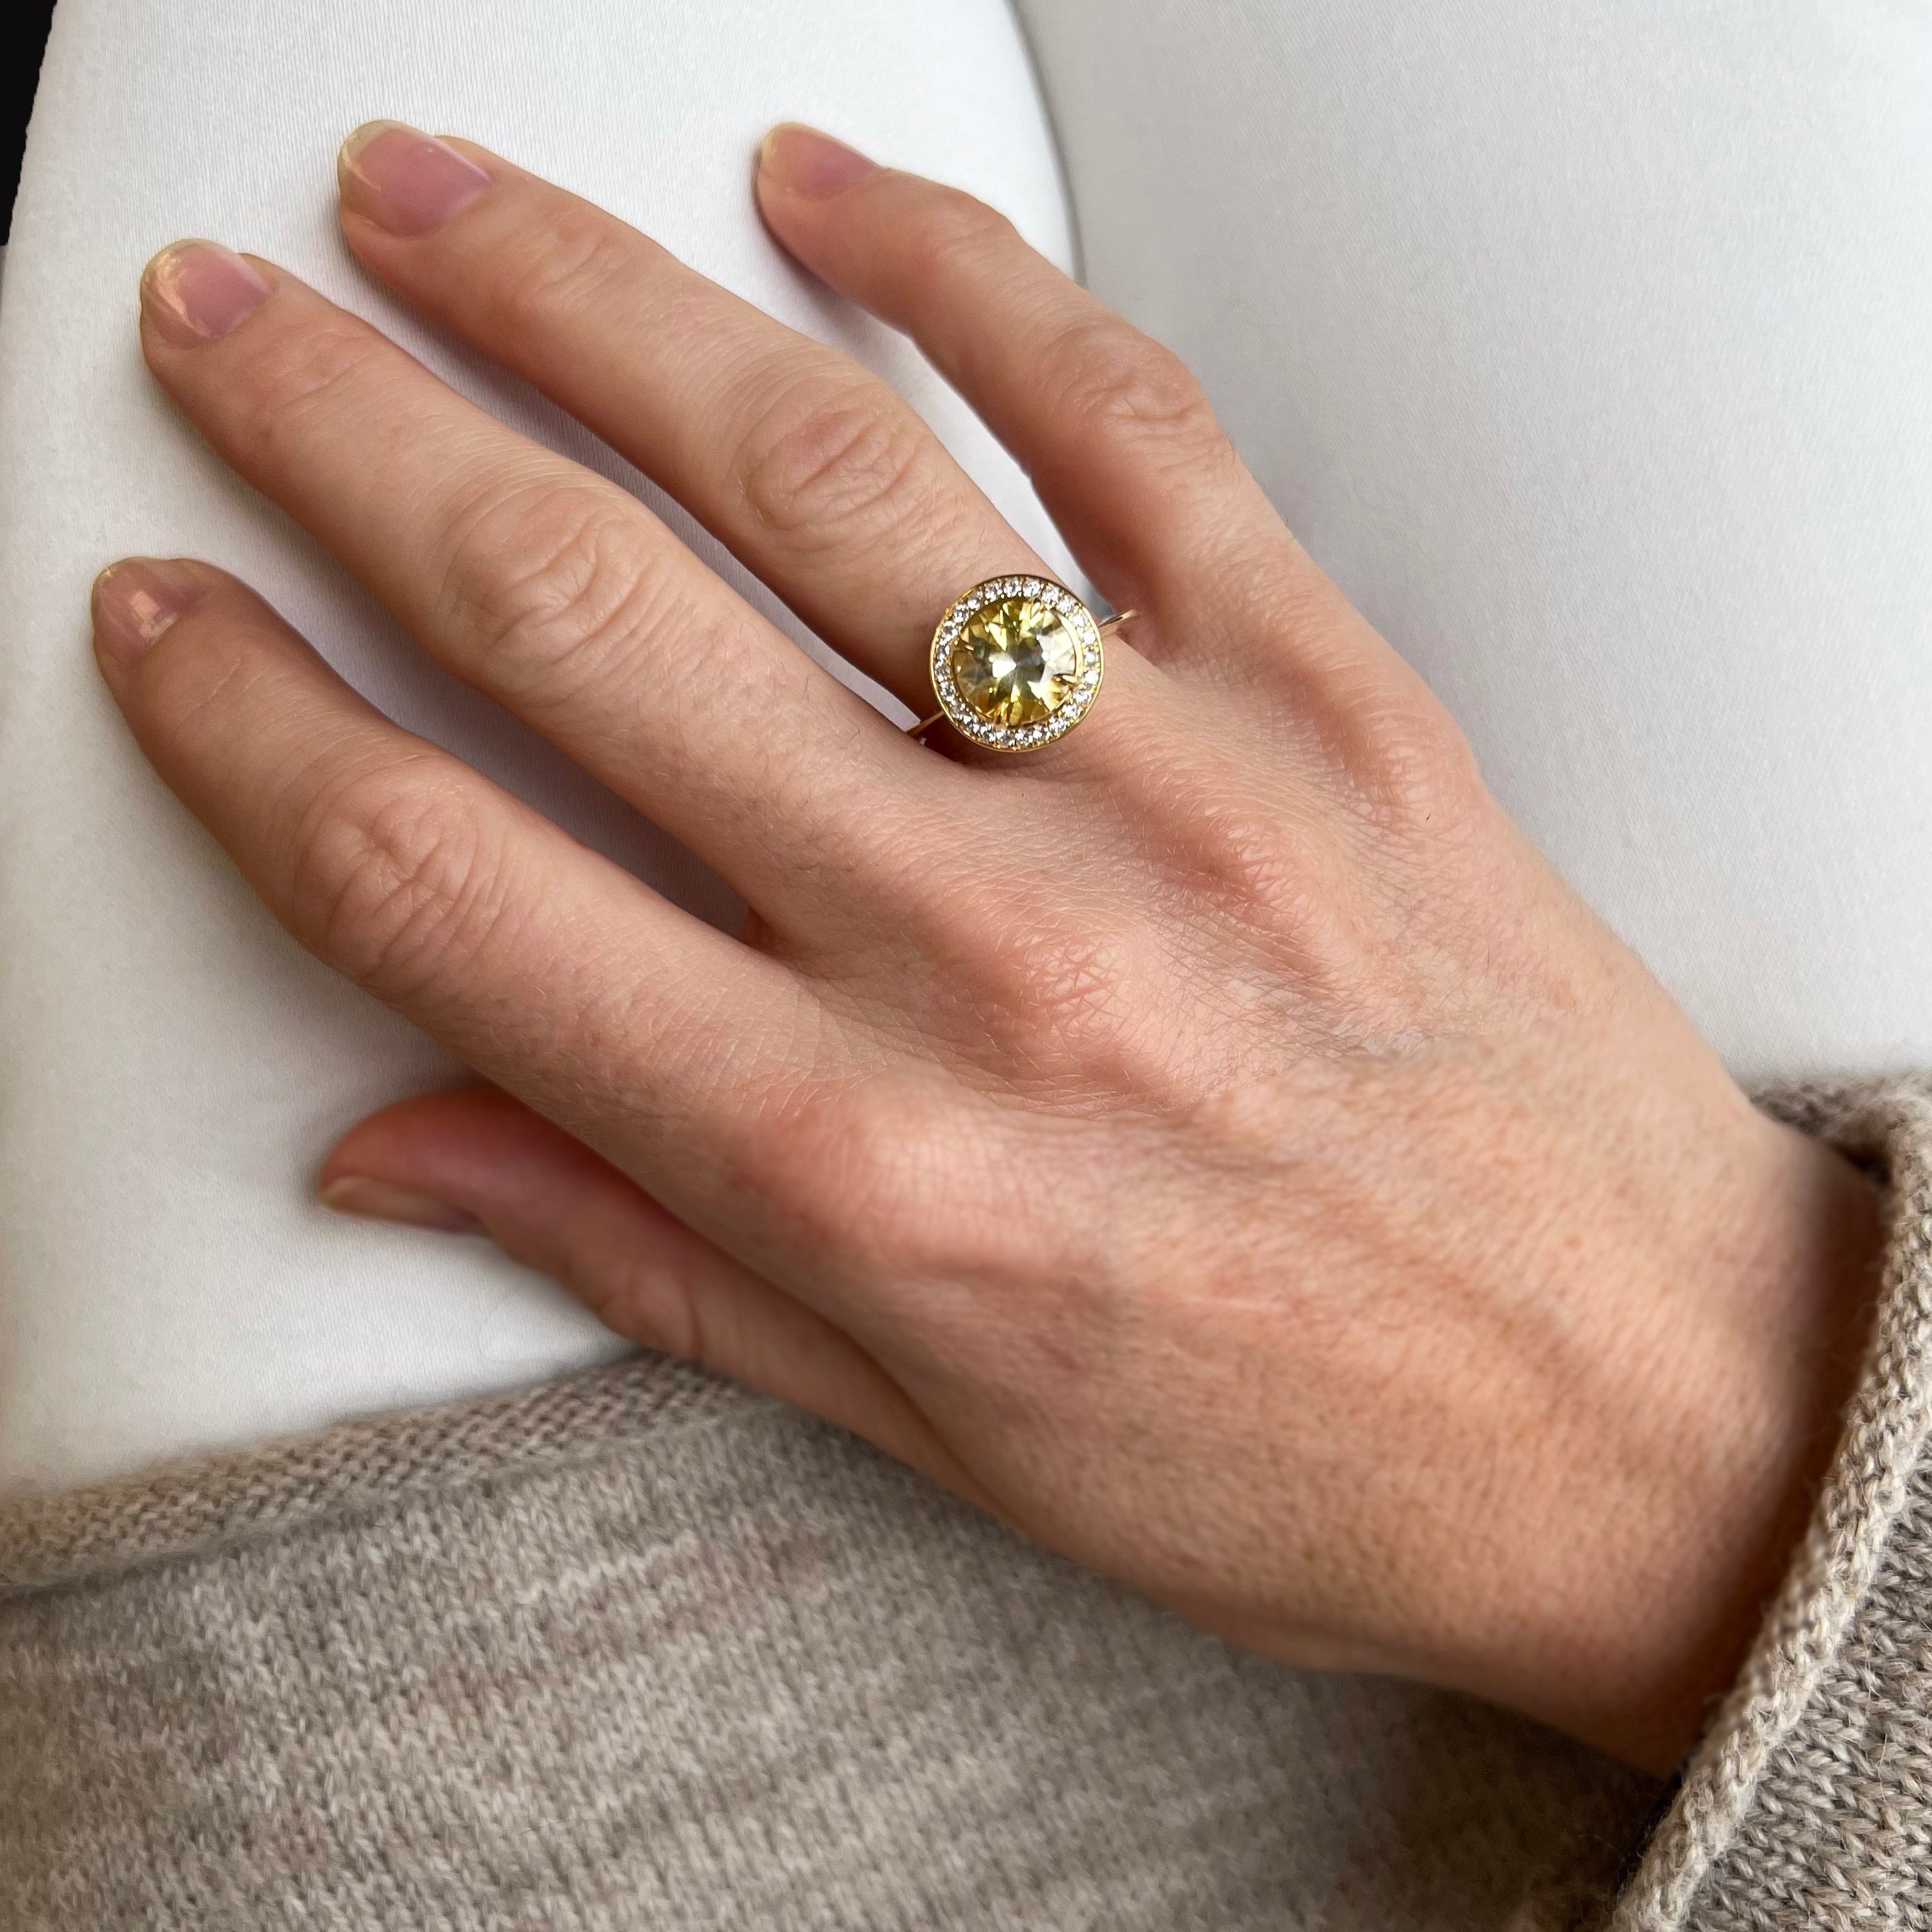 Yellow Sapphire and Diamond Ring